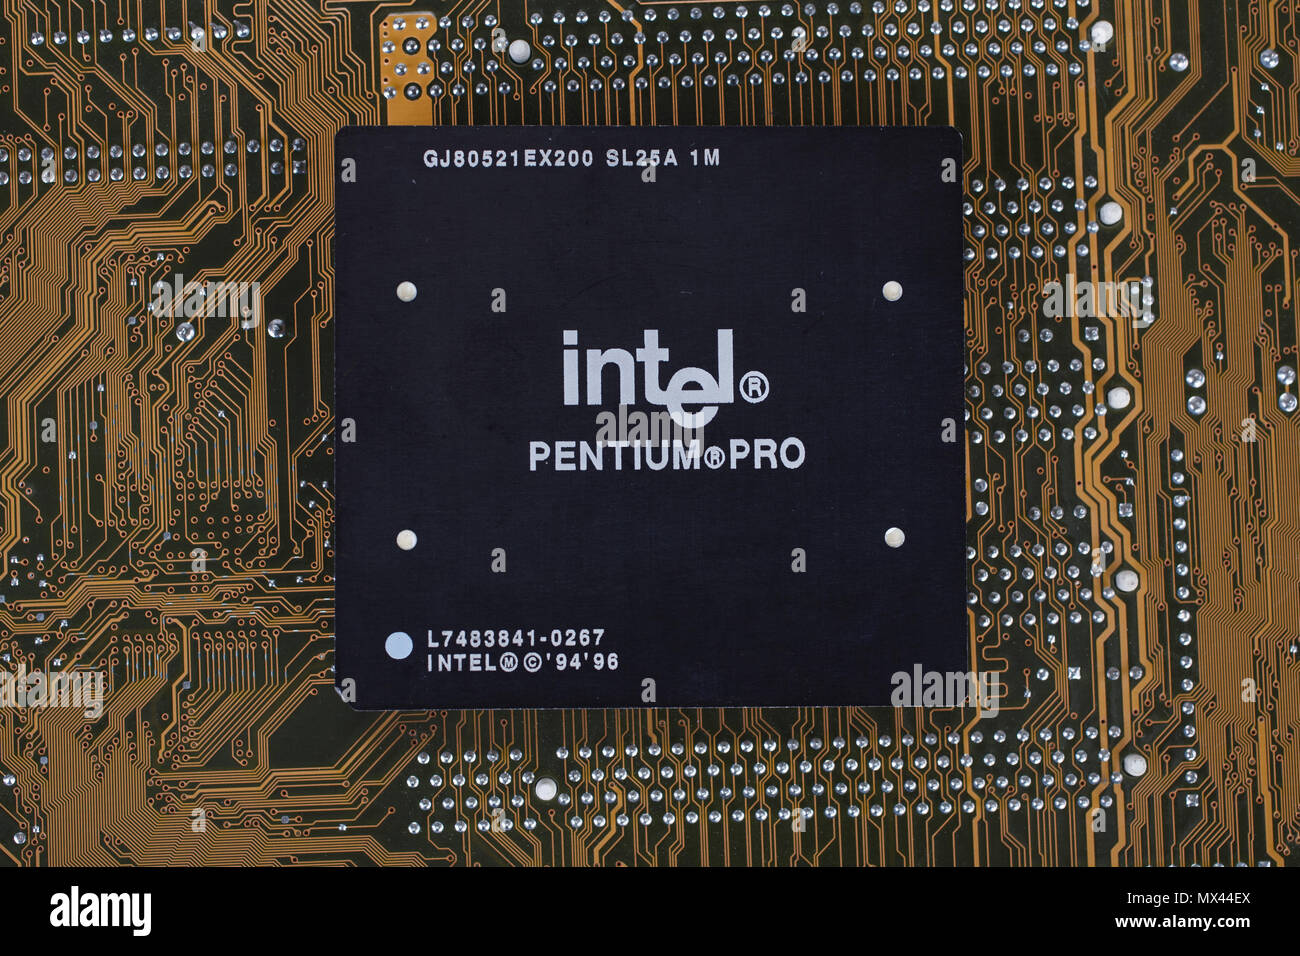 KYIV, UKRAINE - Jan. 28, 2018. Intel Pentium Pro processor on motherboard. Stock Photo